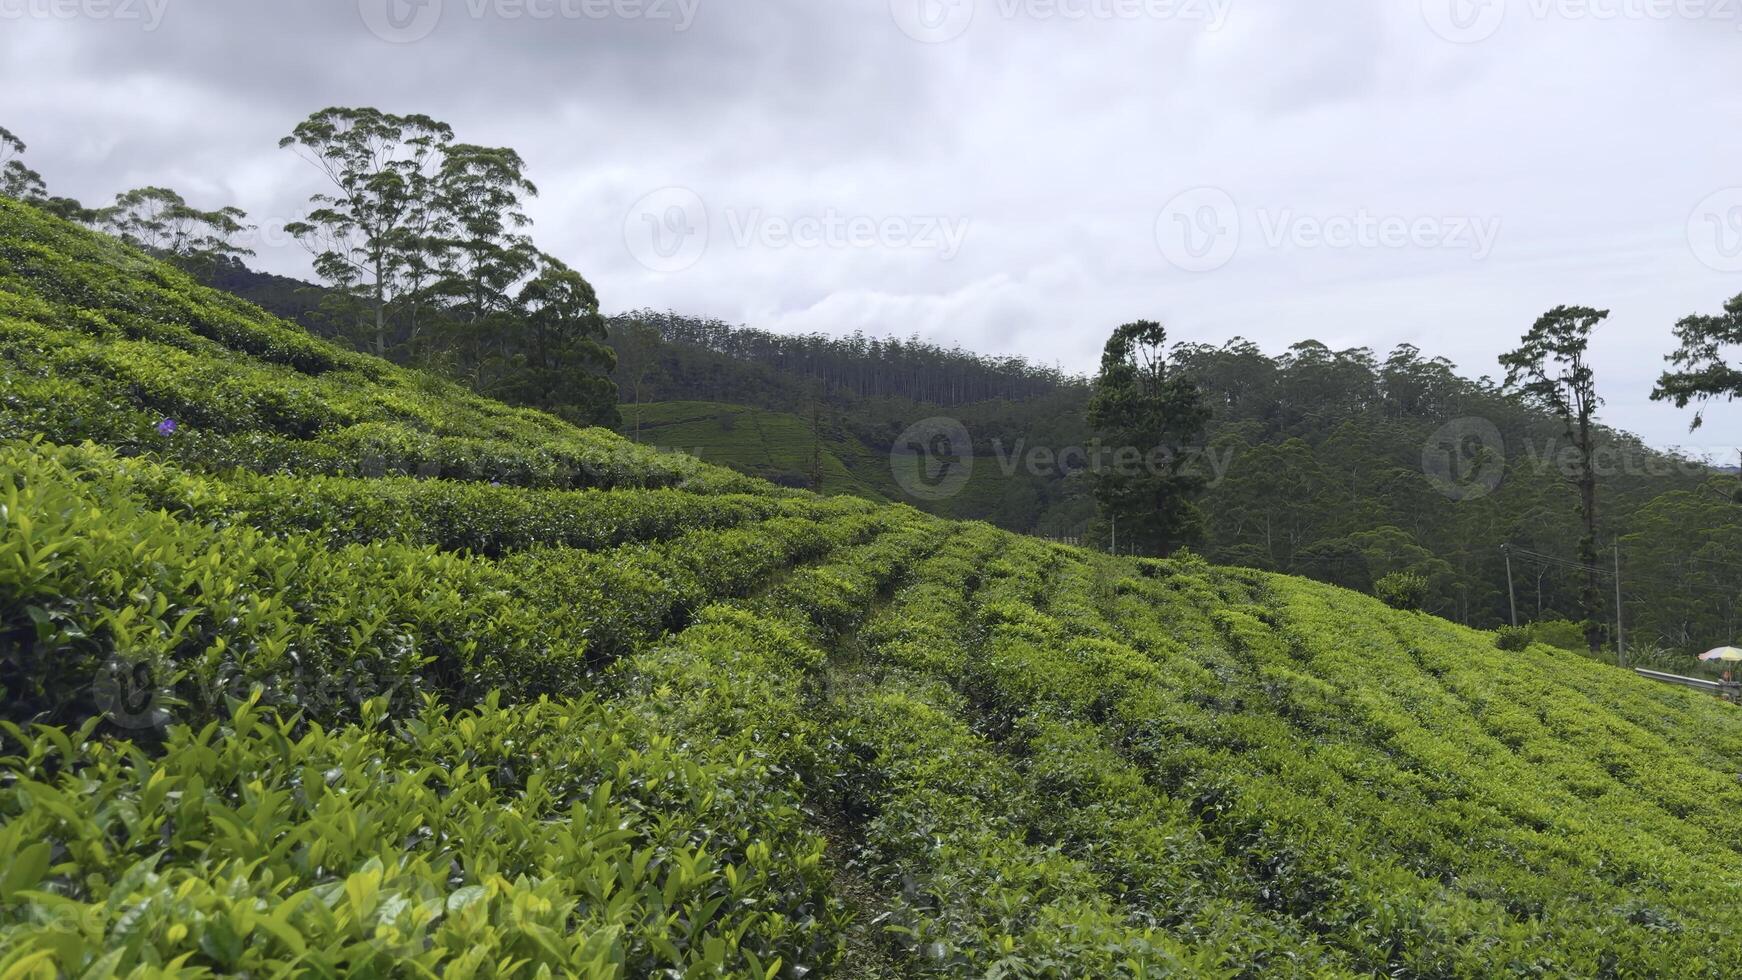 pittoresco Visualizza di tè campi. azione. Linee con verde cespugli su terrazze di tè piantagioni. bellissimo verde terrazze con cespugli e fioritura tè foto